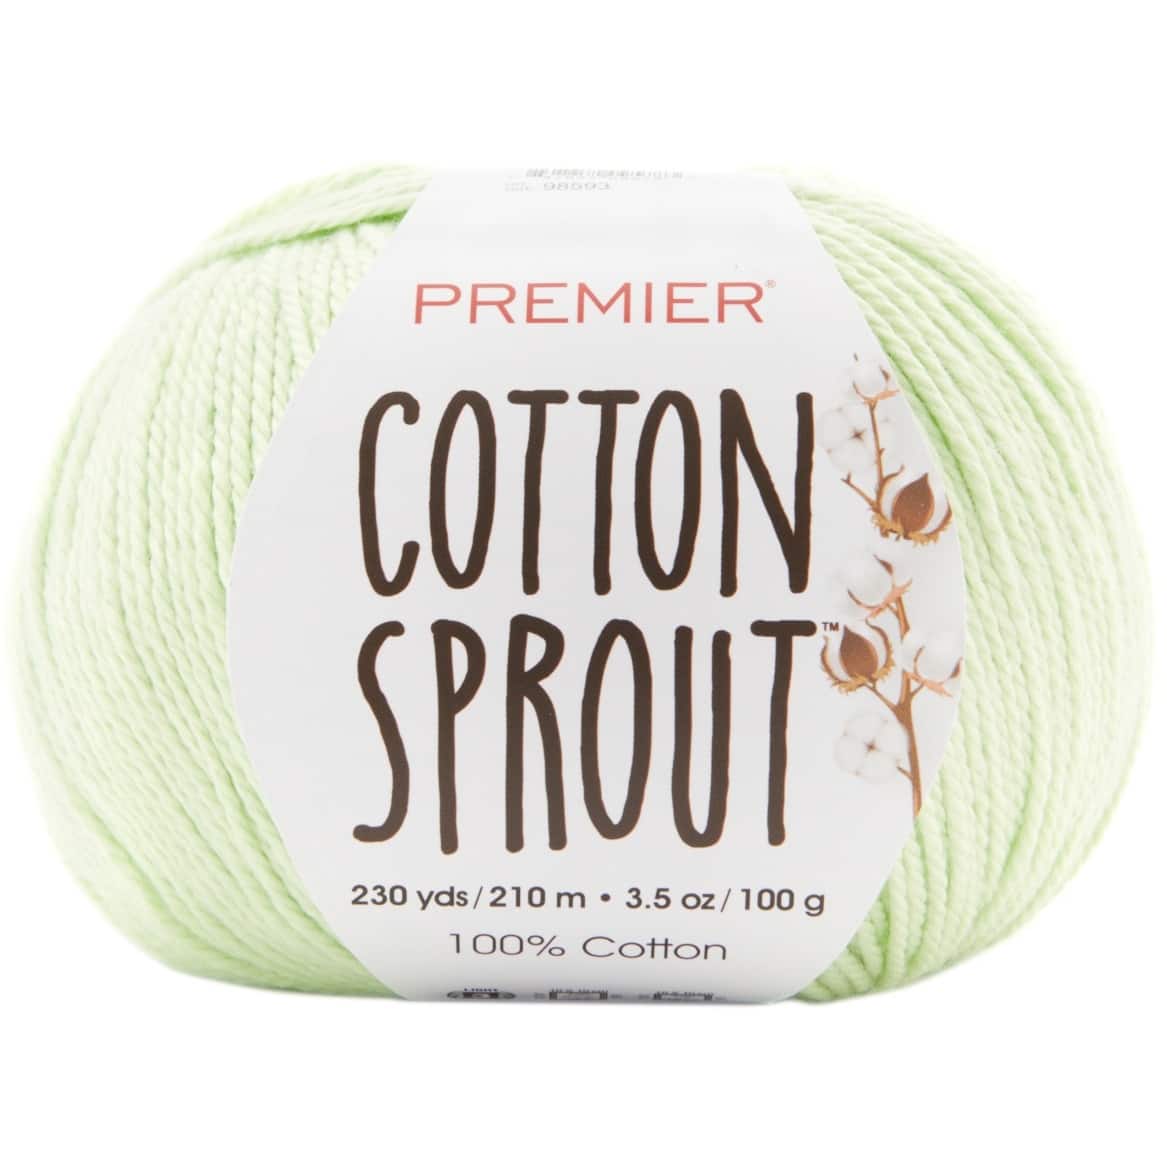 Premier Yarns 27-22 Cotton Fair Solid Yarn-Sprout 